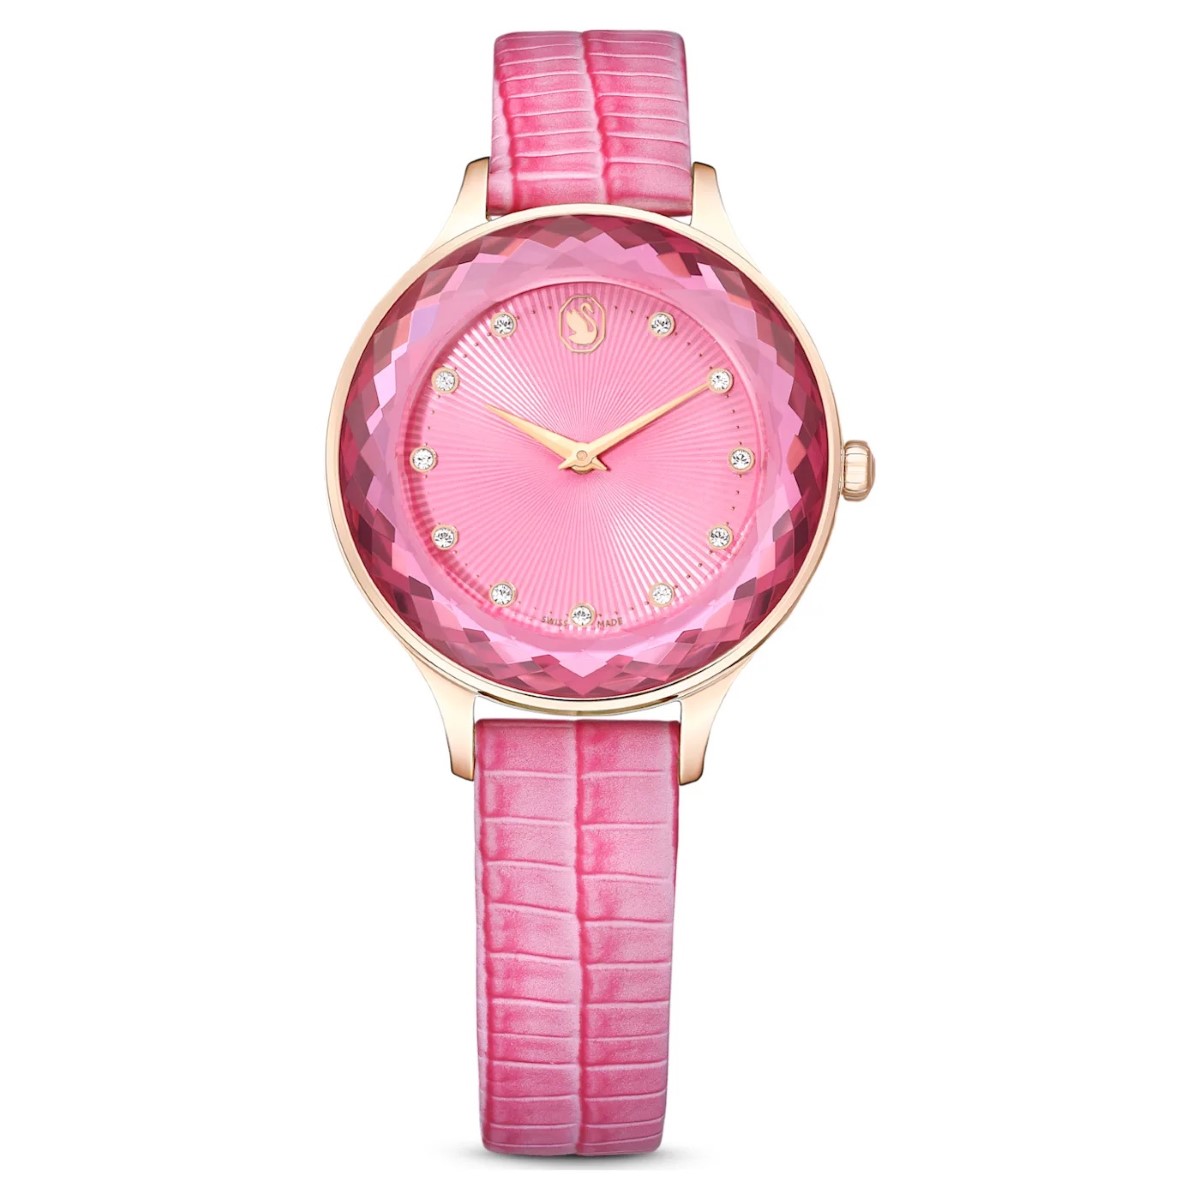 Photos - Wrist Watch Swarovski Octea Nova Leather Strap Watch - Pink with Rose Gold Plating 